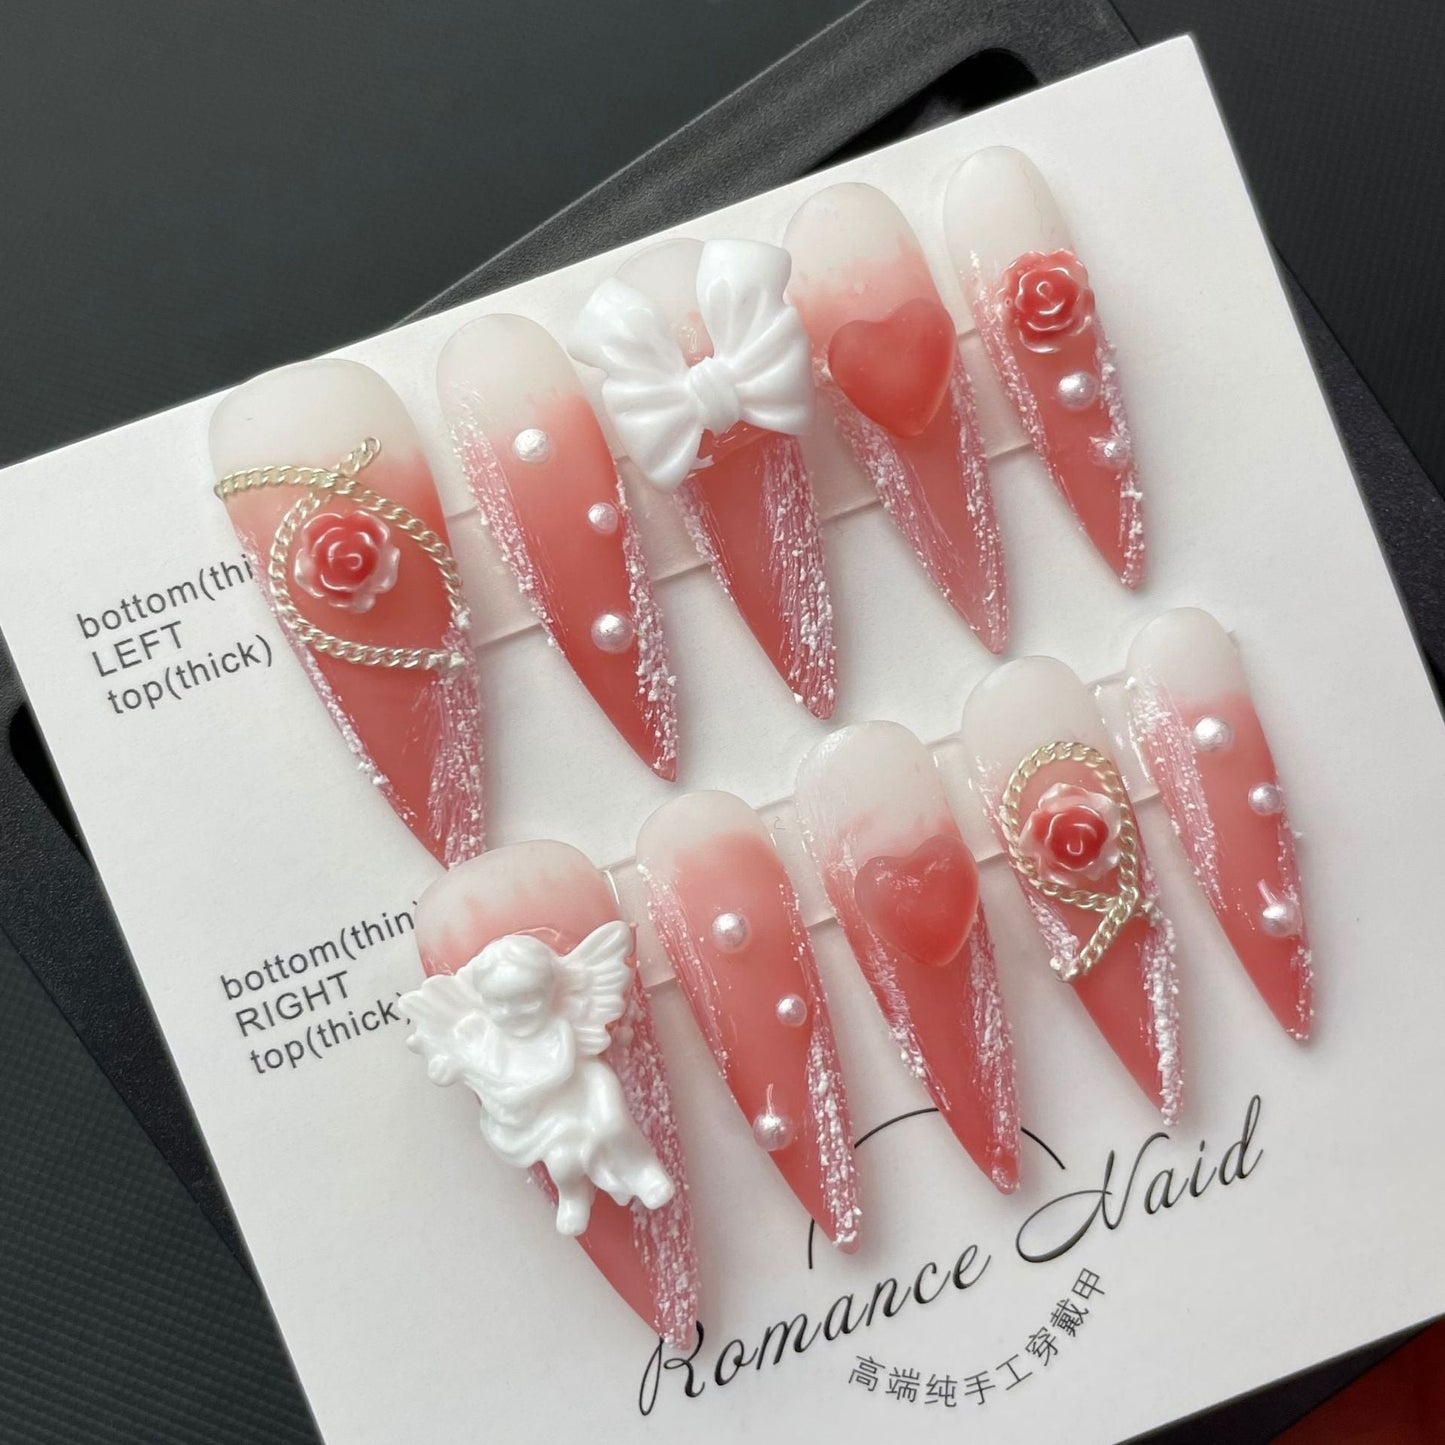 634 Rose Angel press on nails 100% handmade false nails pink